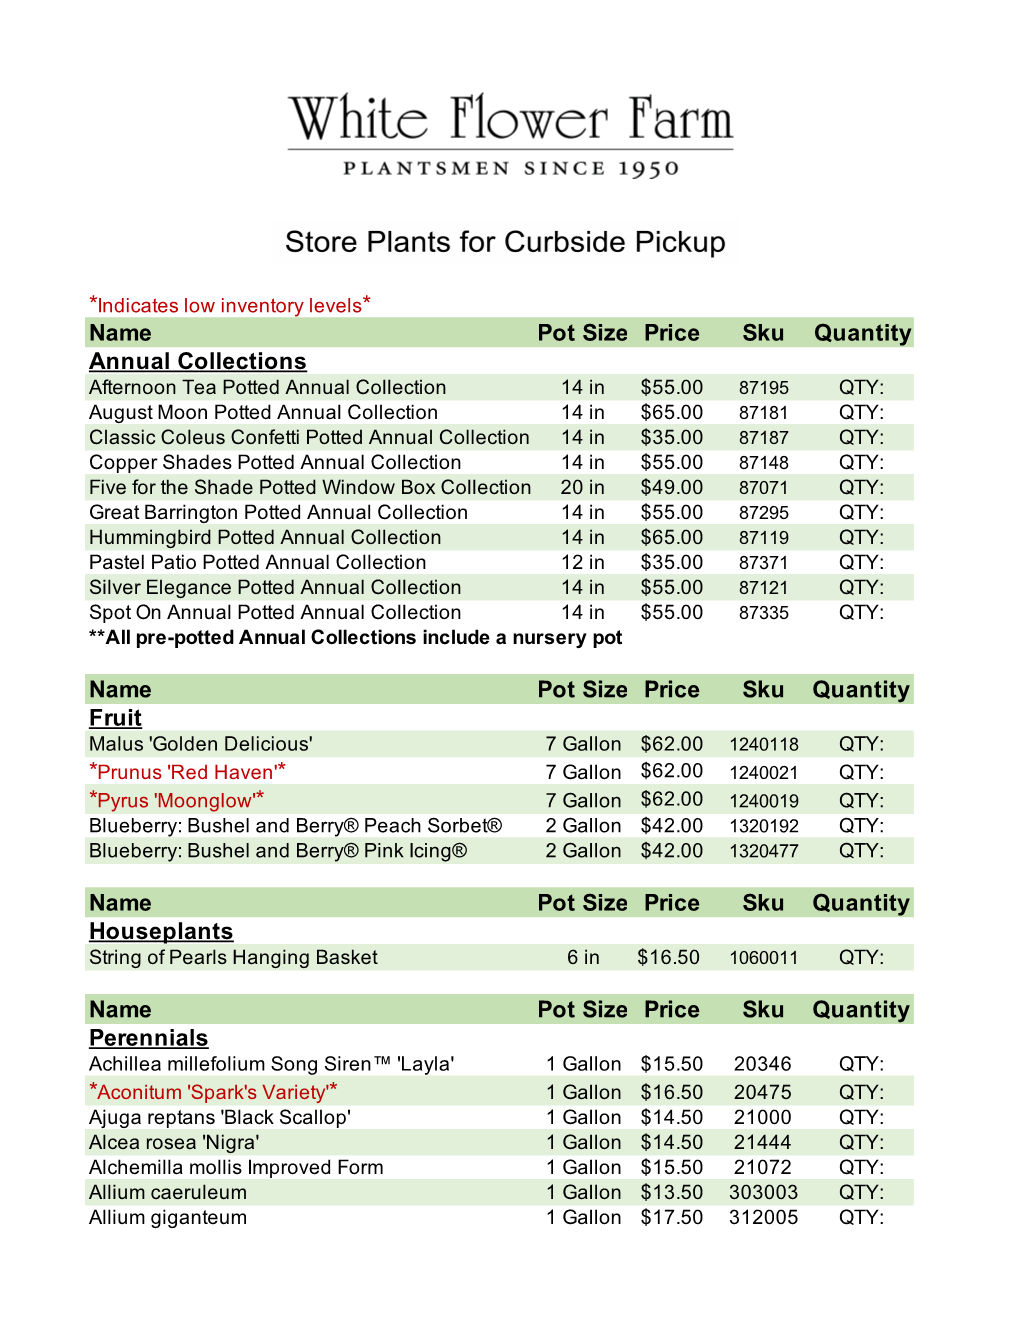 Store Plants for Curbside Pickup Quantity.Xlsx